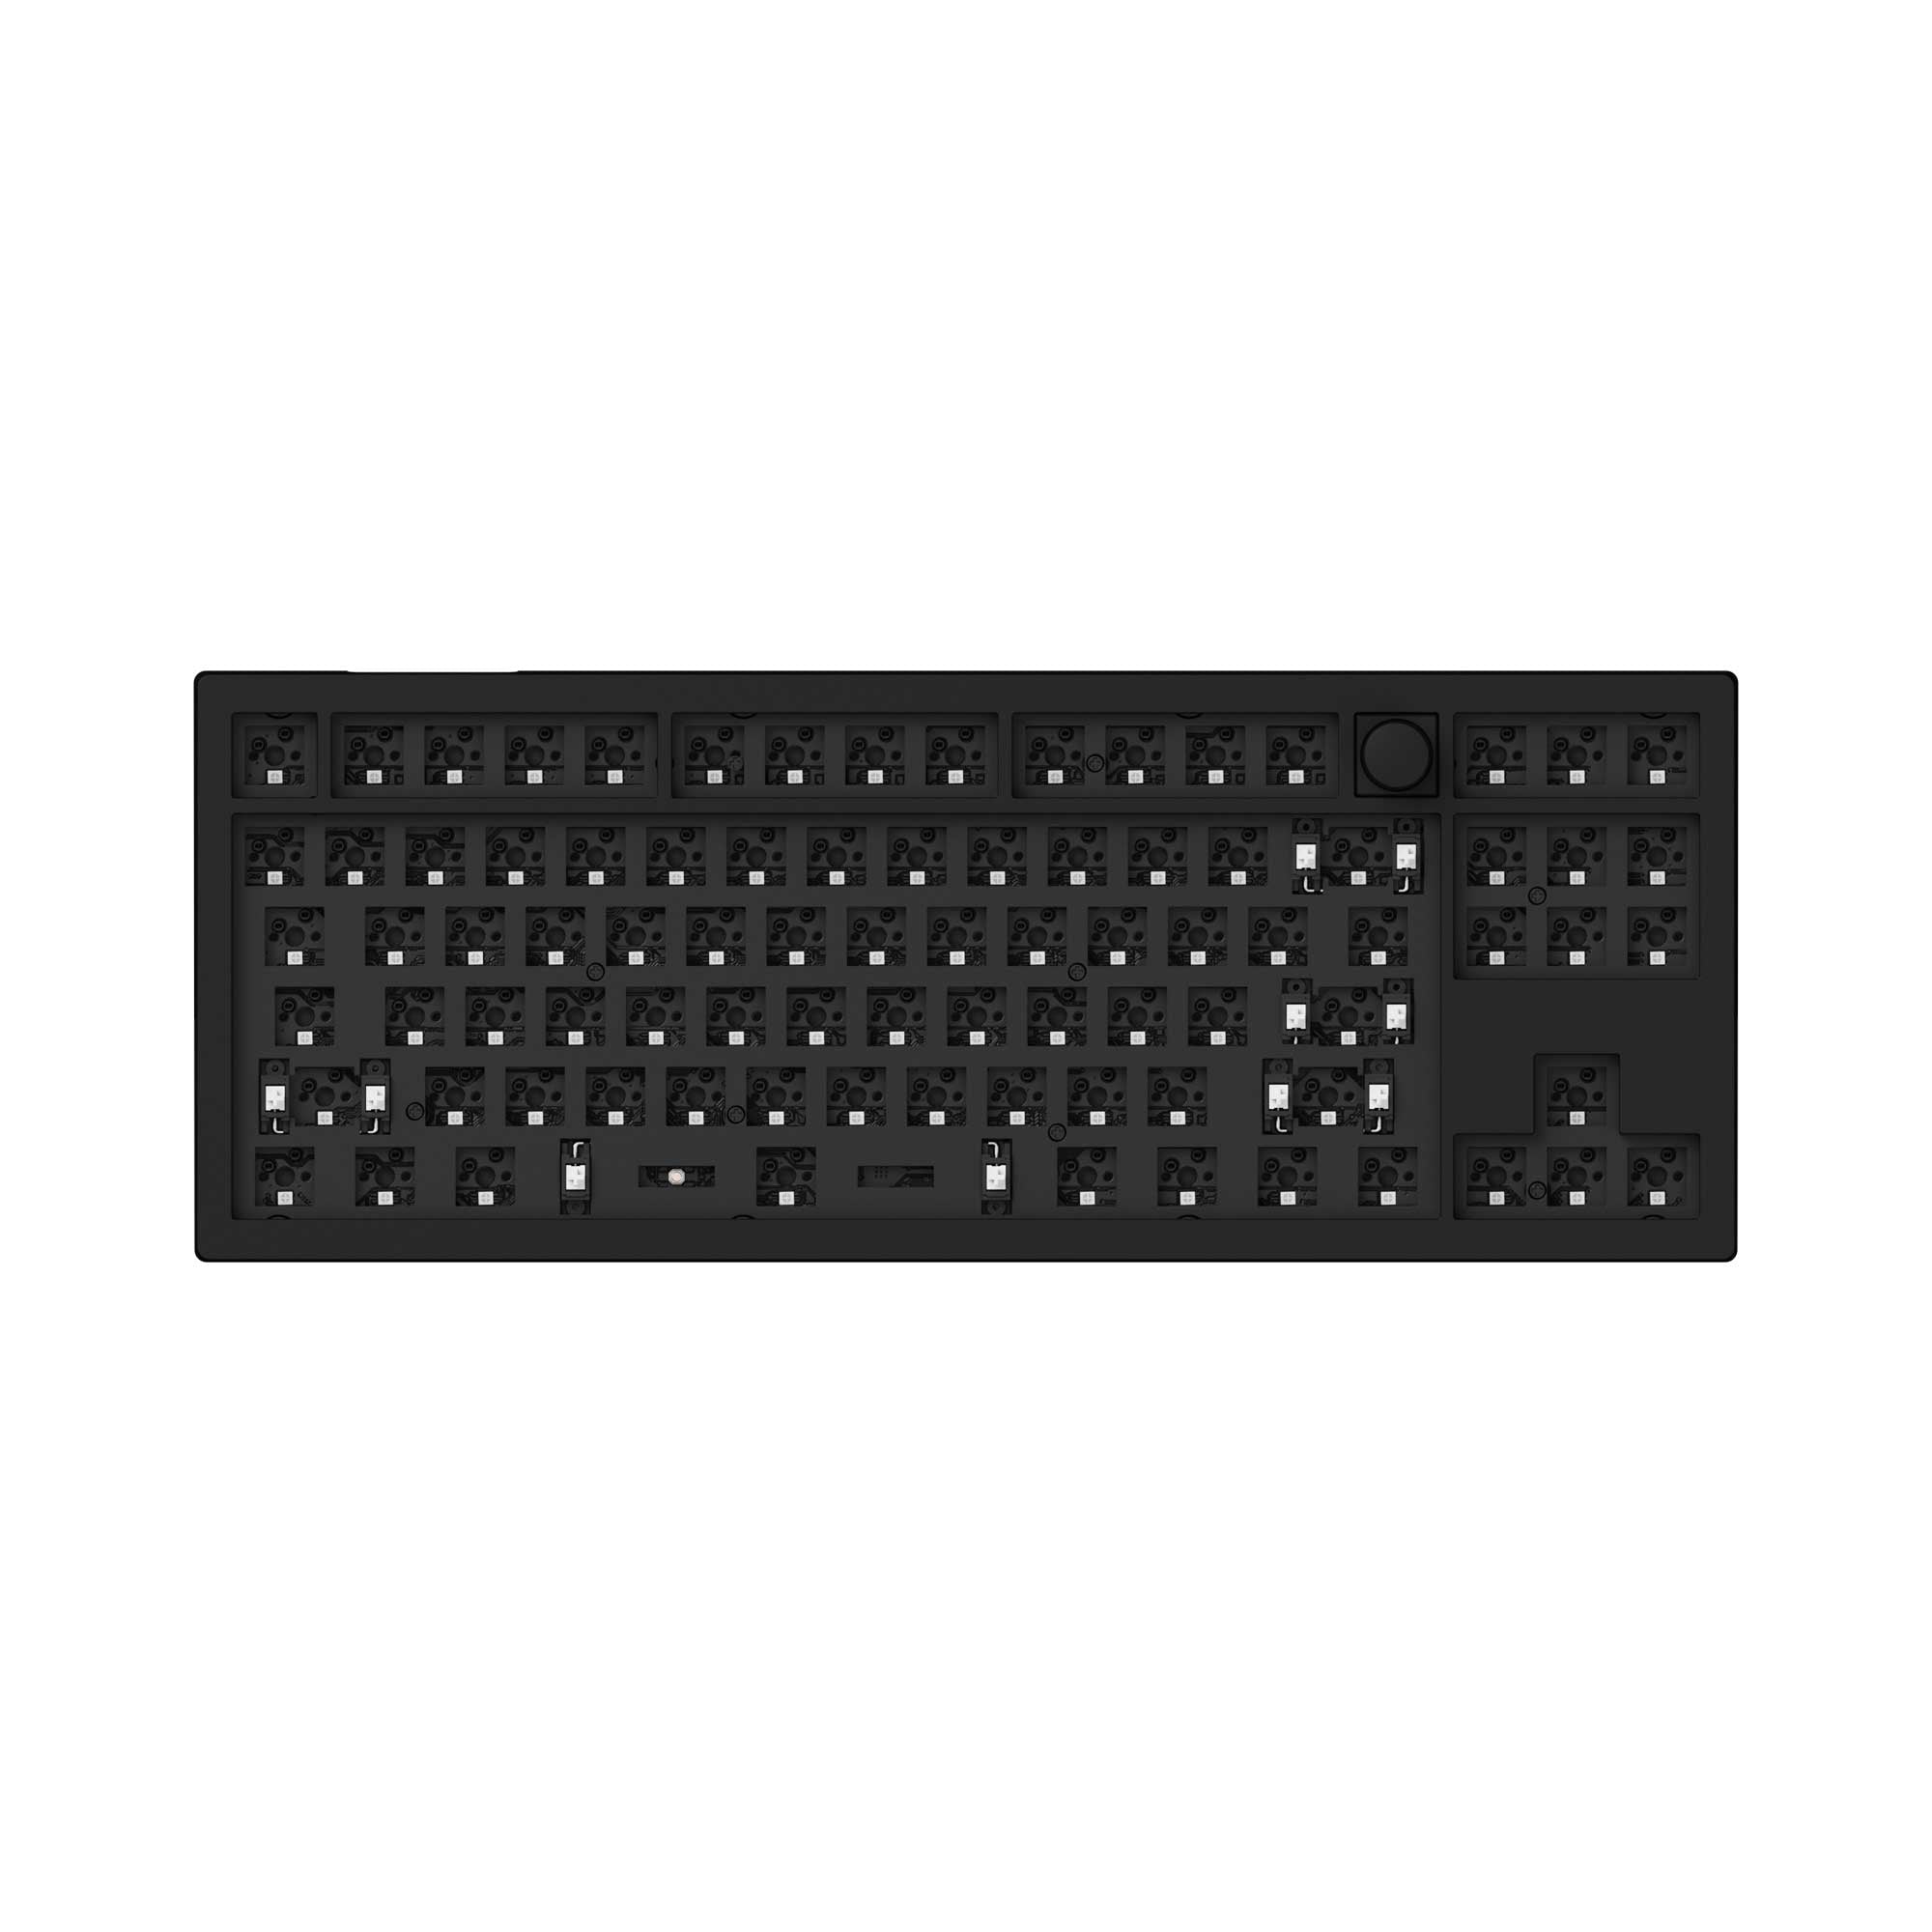 Keychron V3 Custom Mechanical Keyboard knob carbon black QMK/VIA tenkeyless hot-swappable barebone